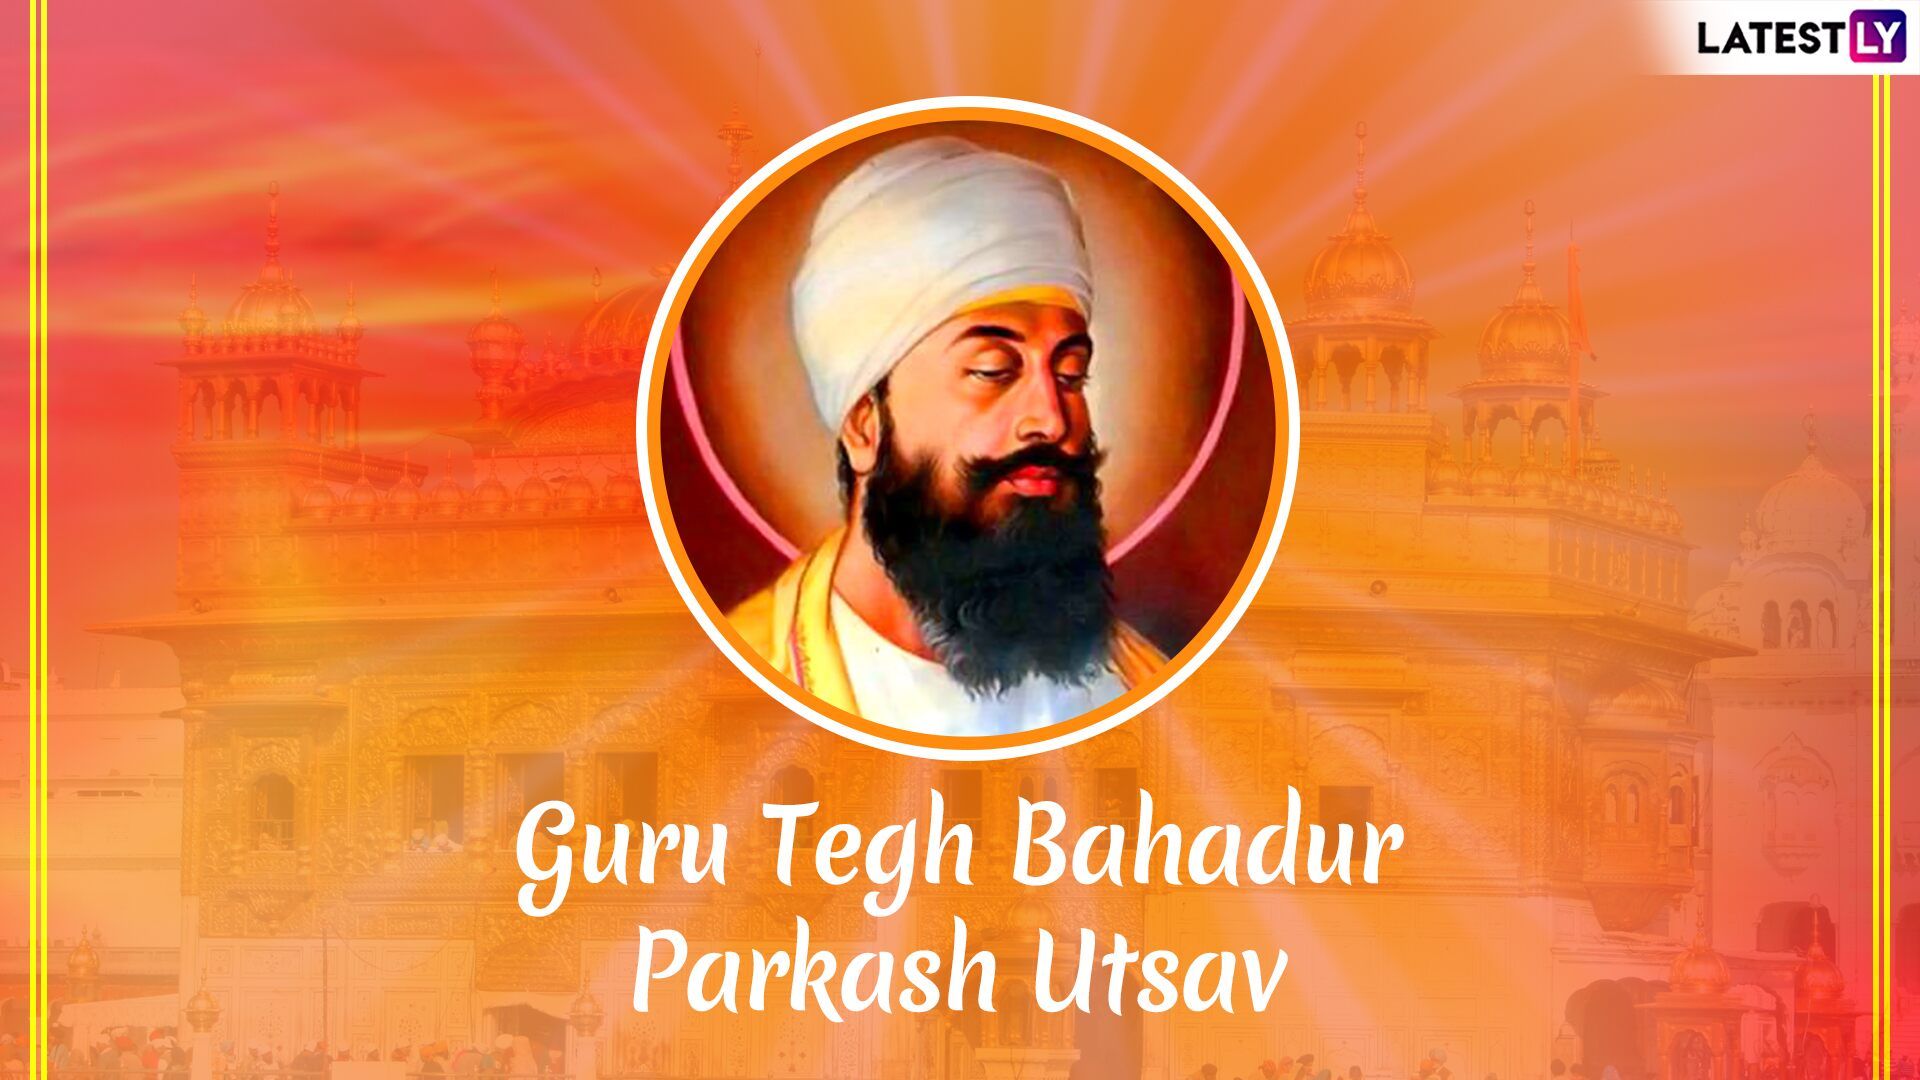 Guru Tegh Bahadur Jayanti Image & HD Wallpaper Free Download